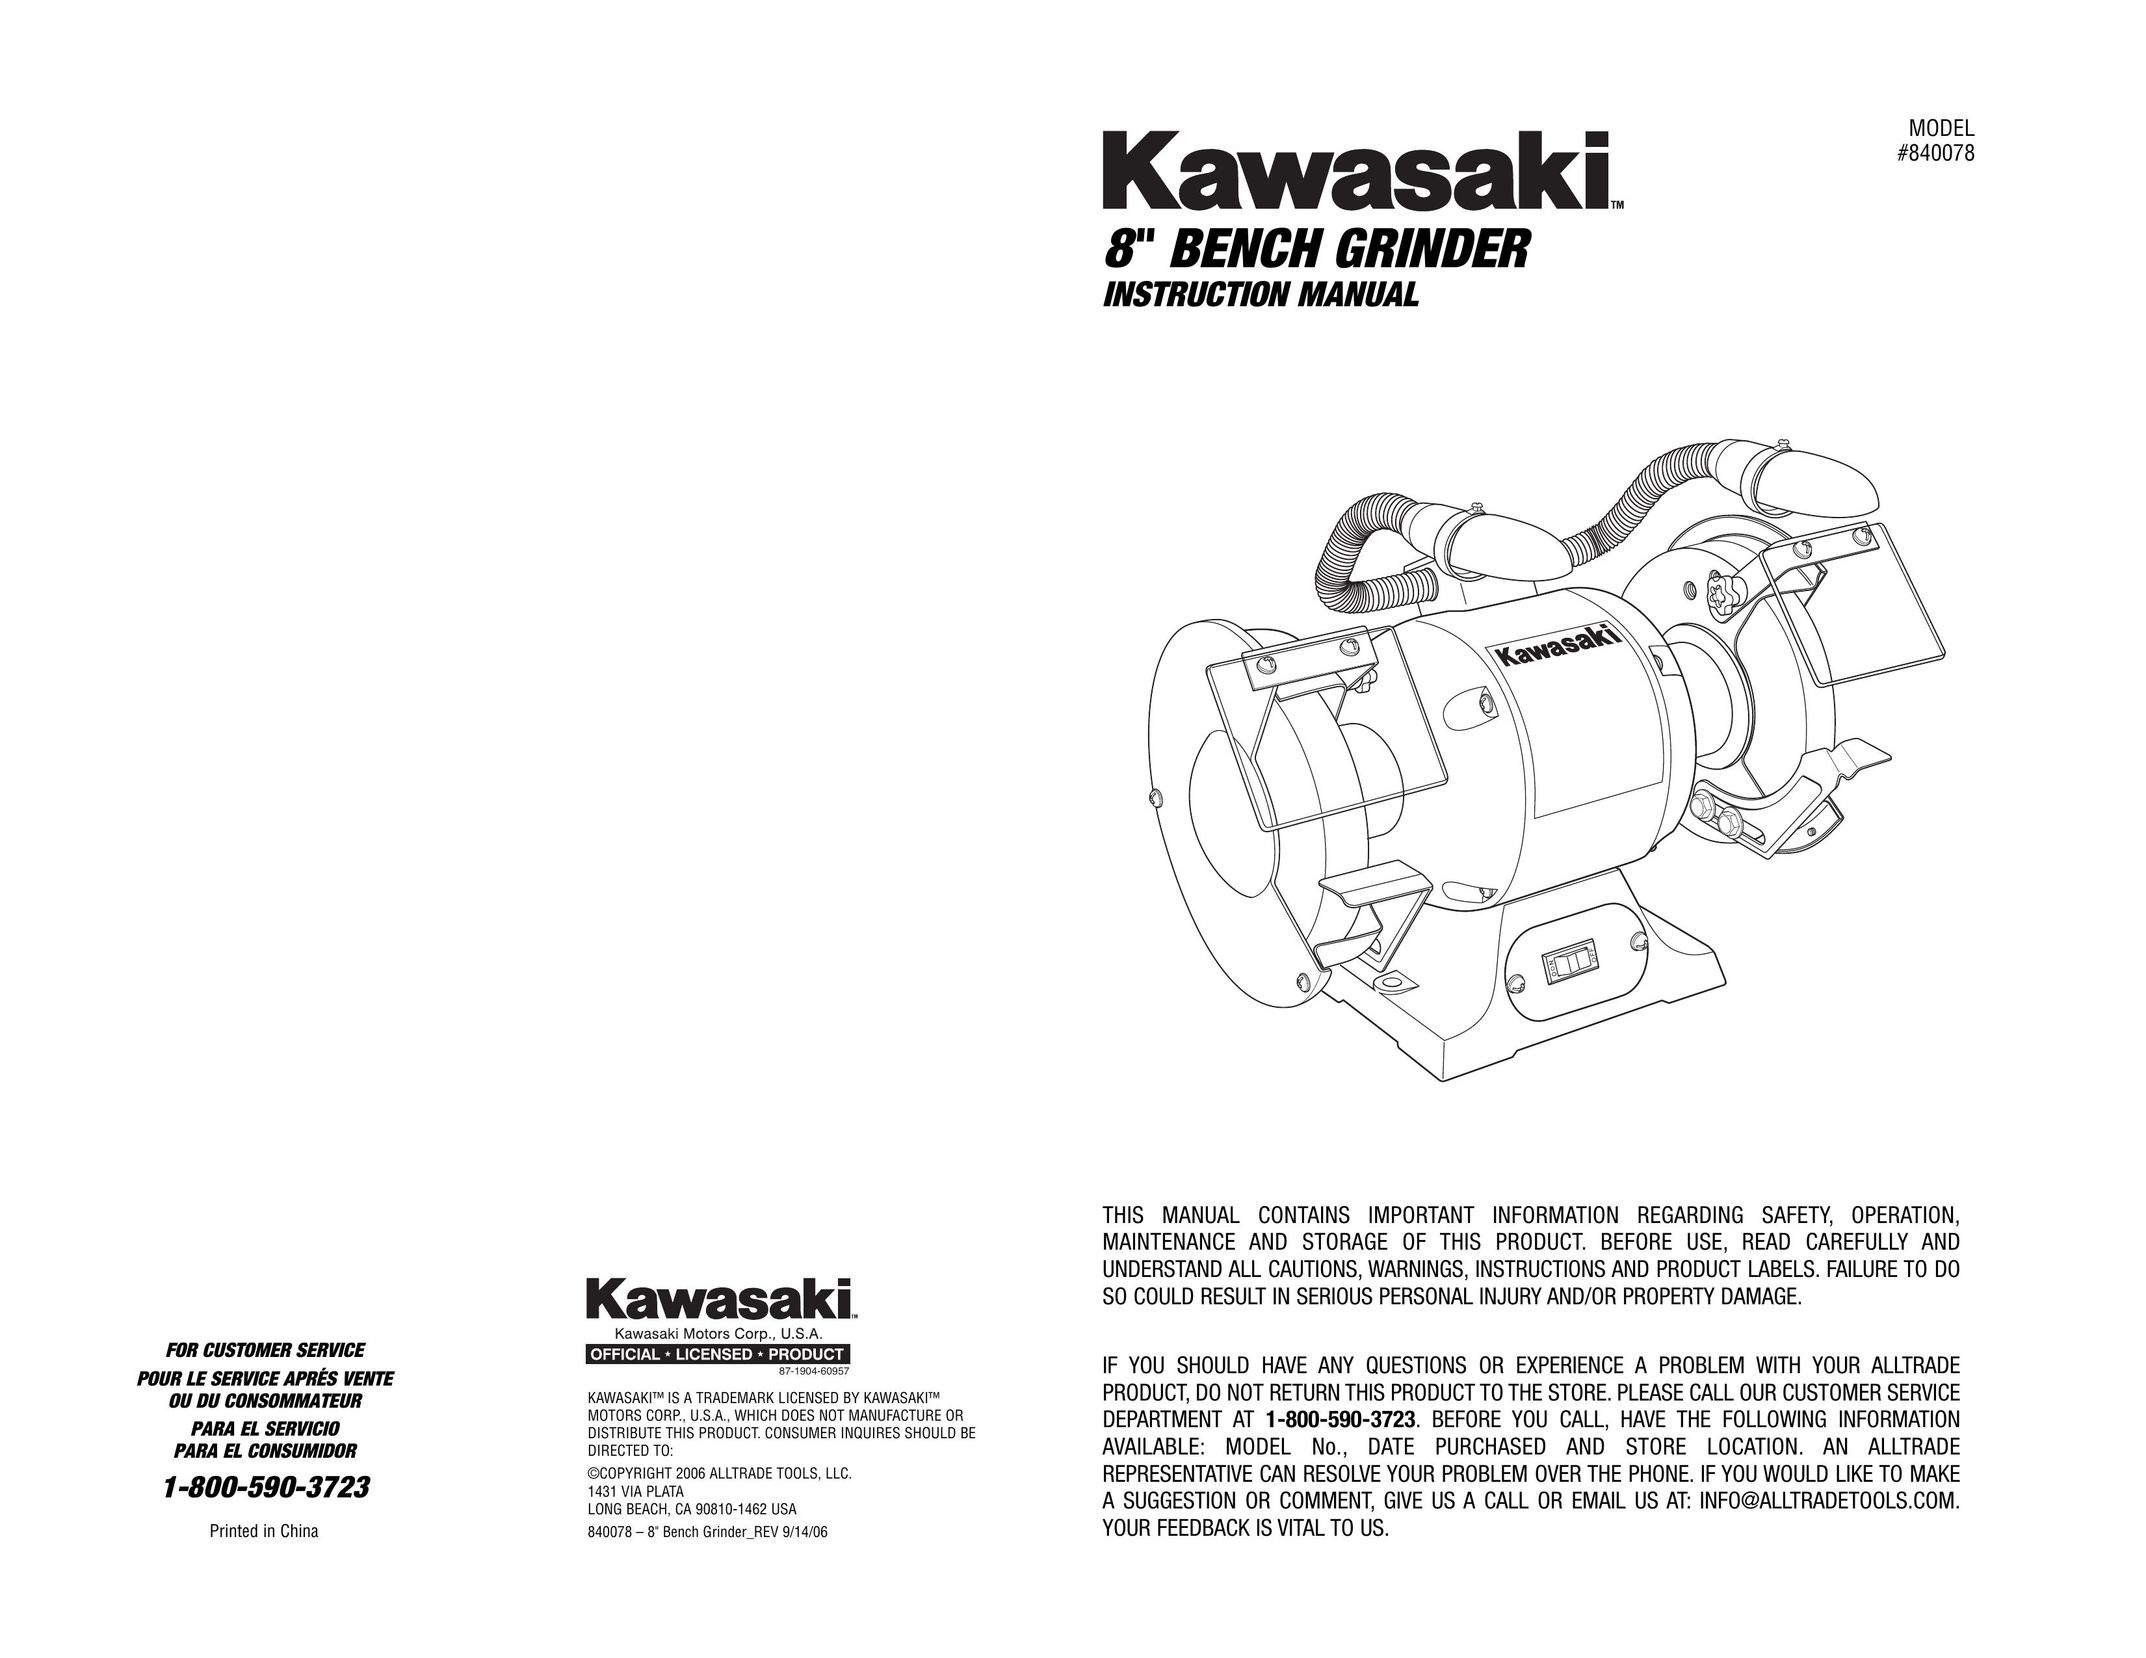 Kawasaki 840078 Grinder User Manual